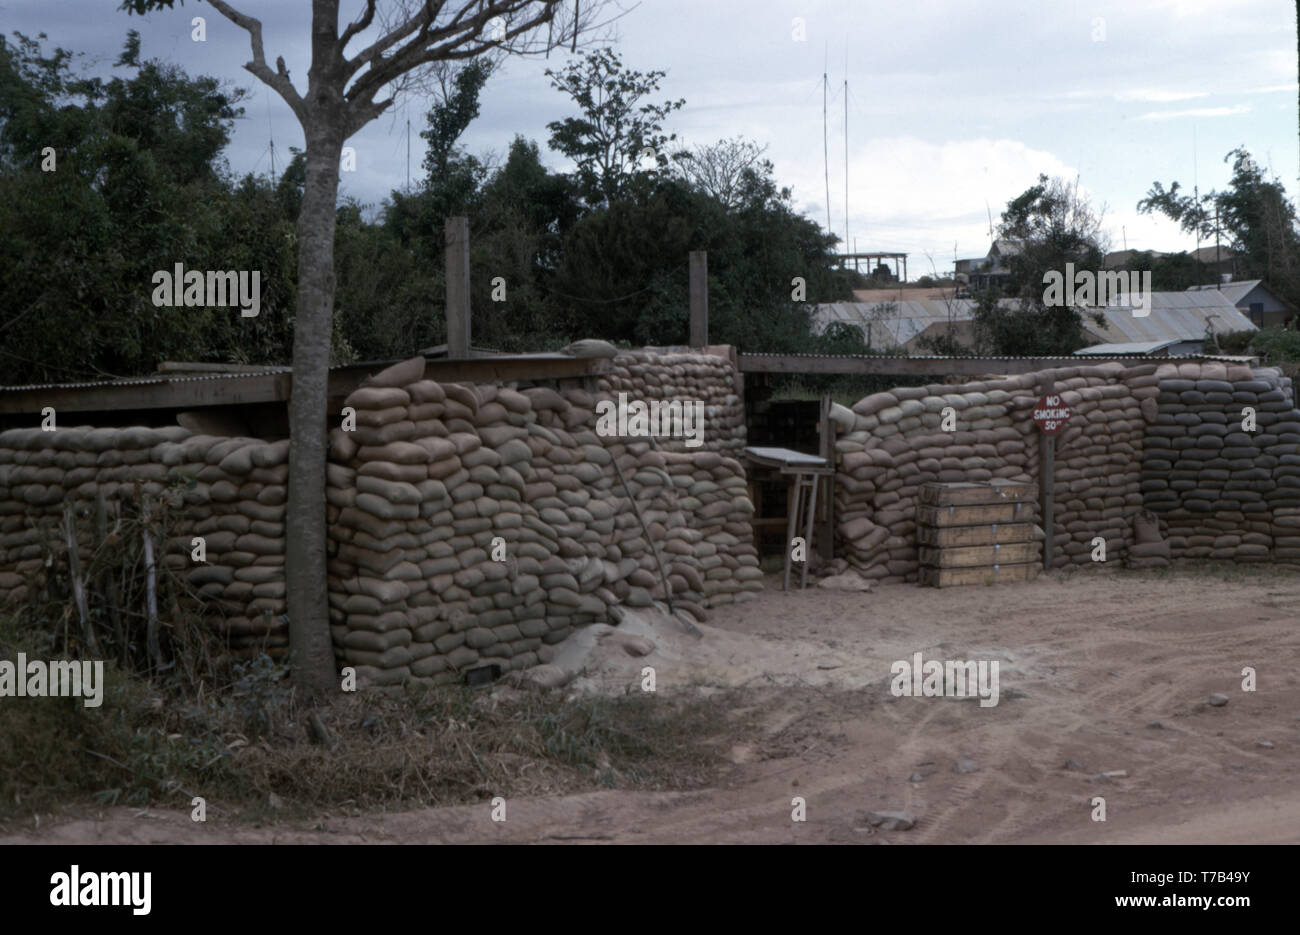 Bunker Vietnam-Krieg der US Army aus Sandsäcken - guerra di Vietnam bunker fatti con sacchi di sabbia Foto Stock